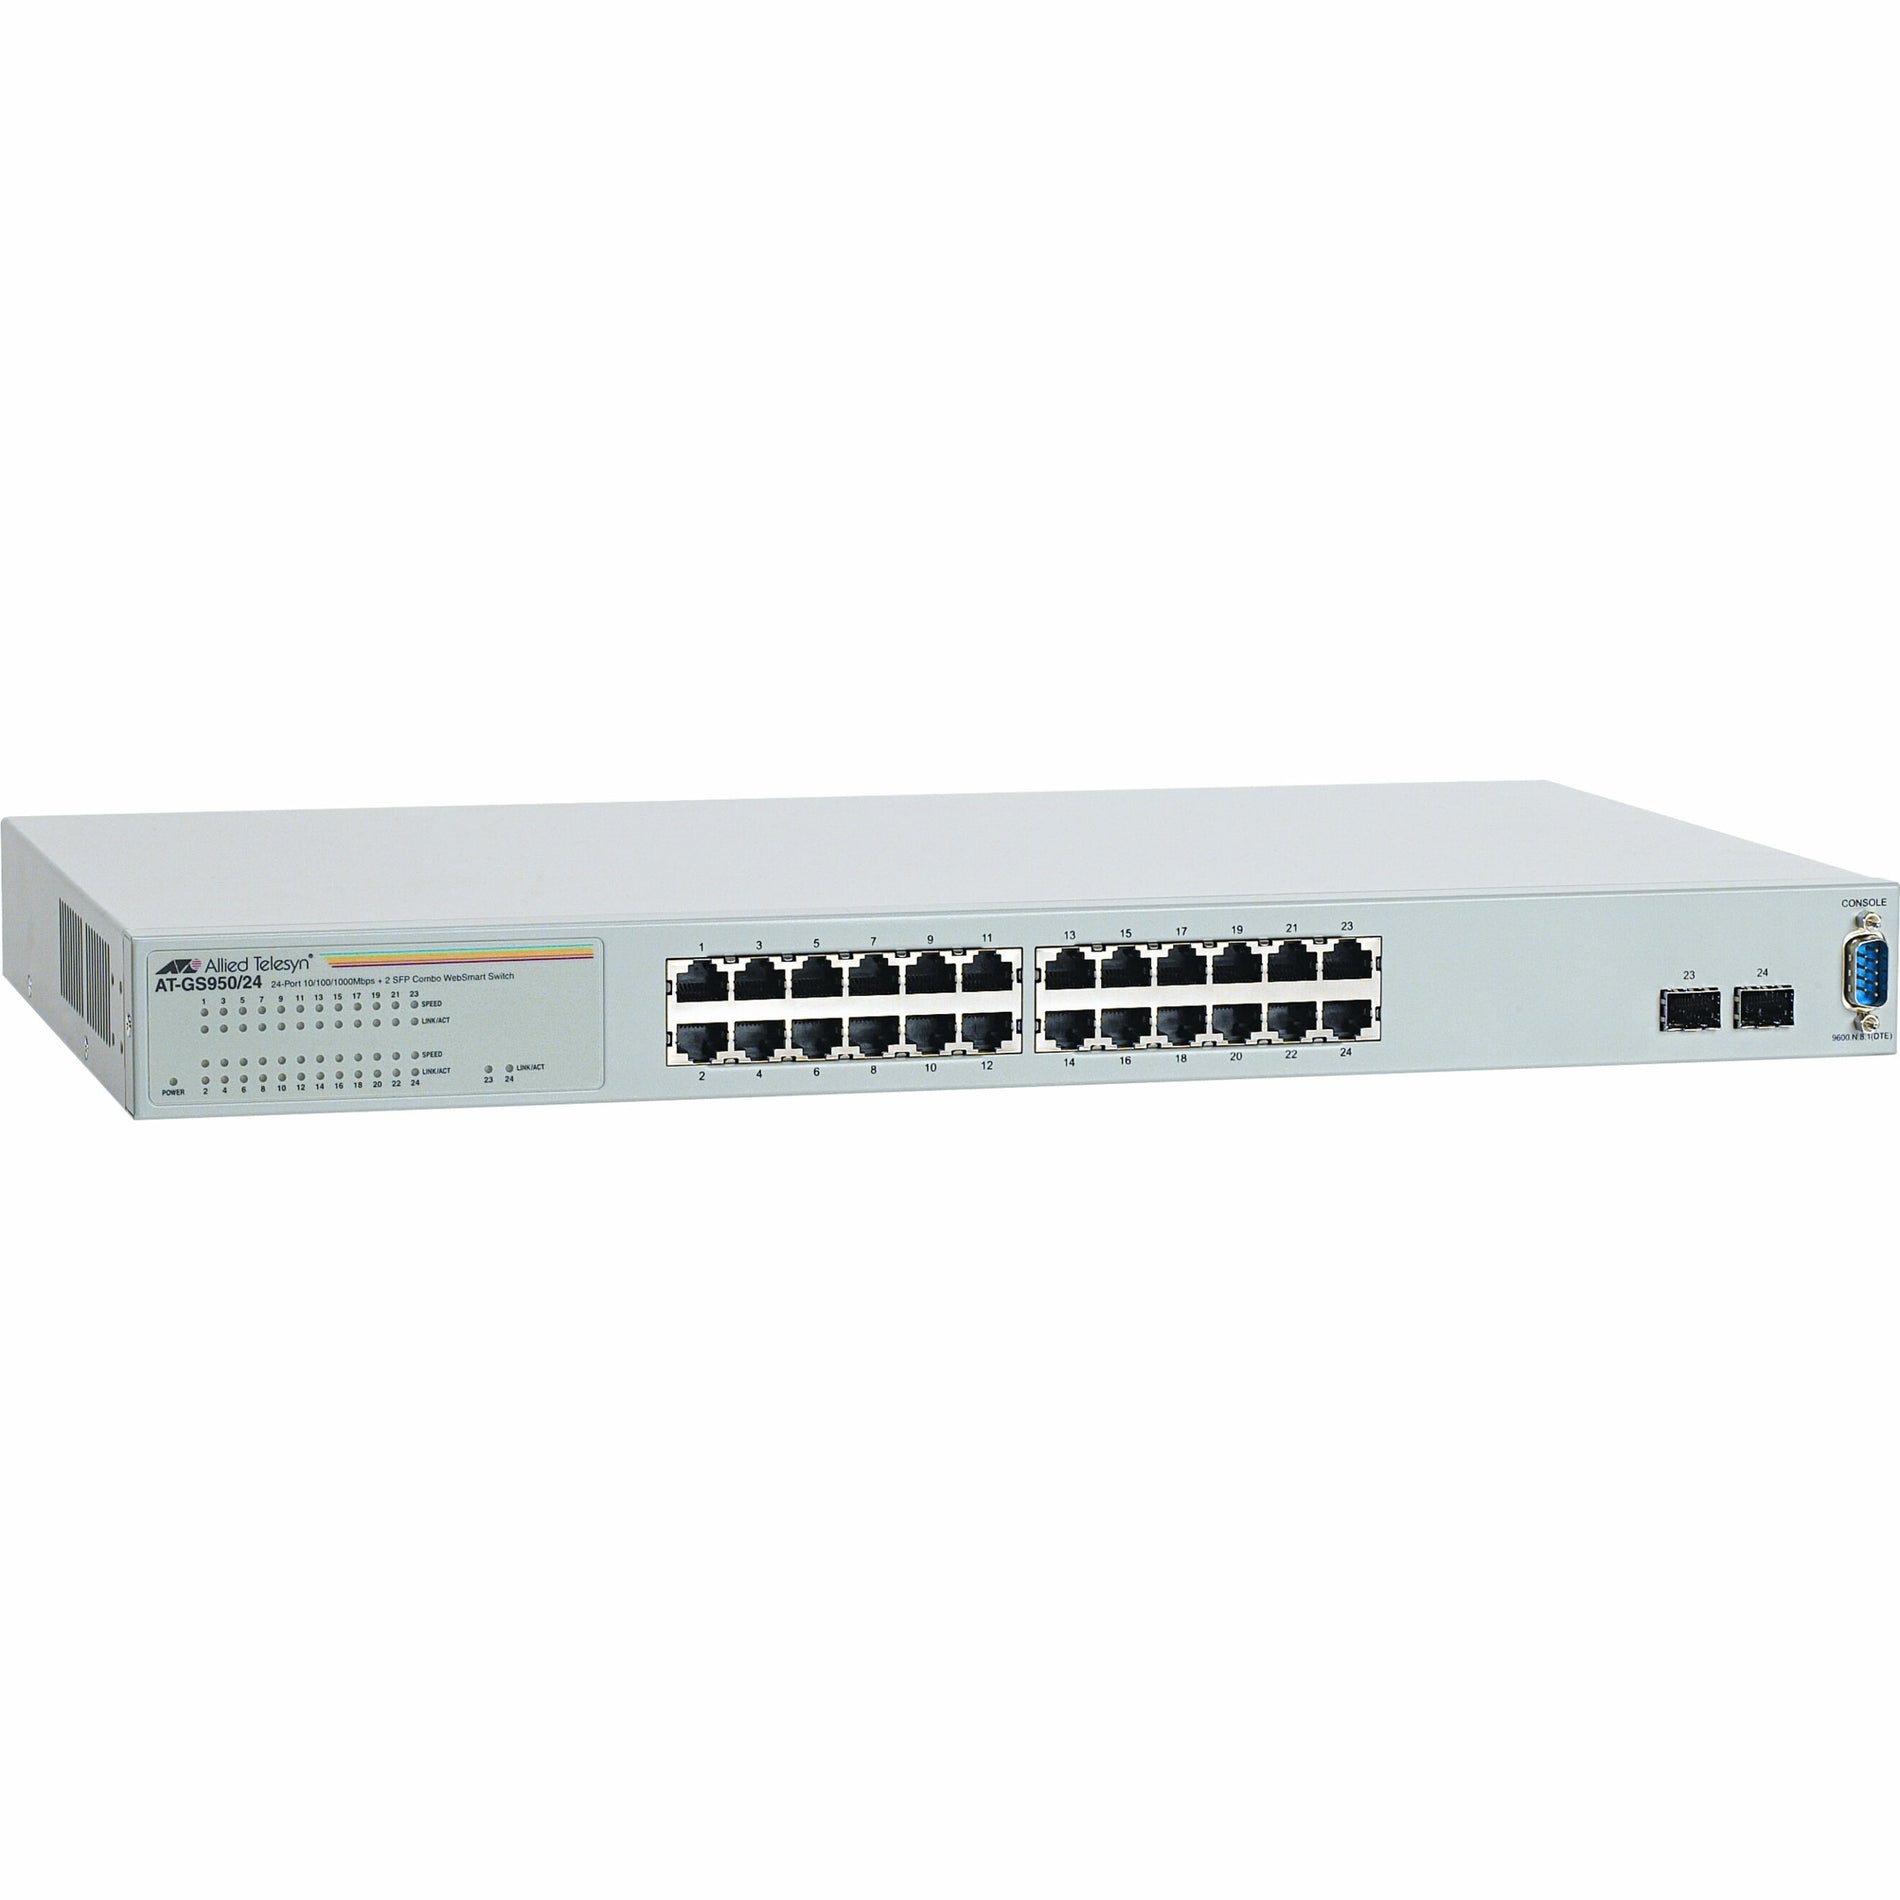 Allied Telesis AT-GS950/24-10 24 Port Gigabit WebSmart Switch, Non-Blocking Architecture, Link Aggregation, Fanless Design